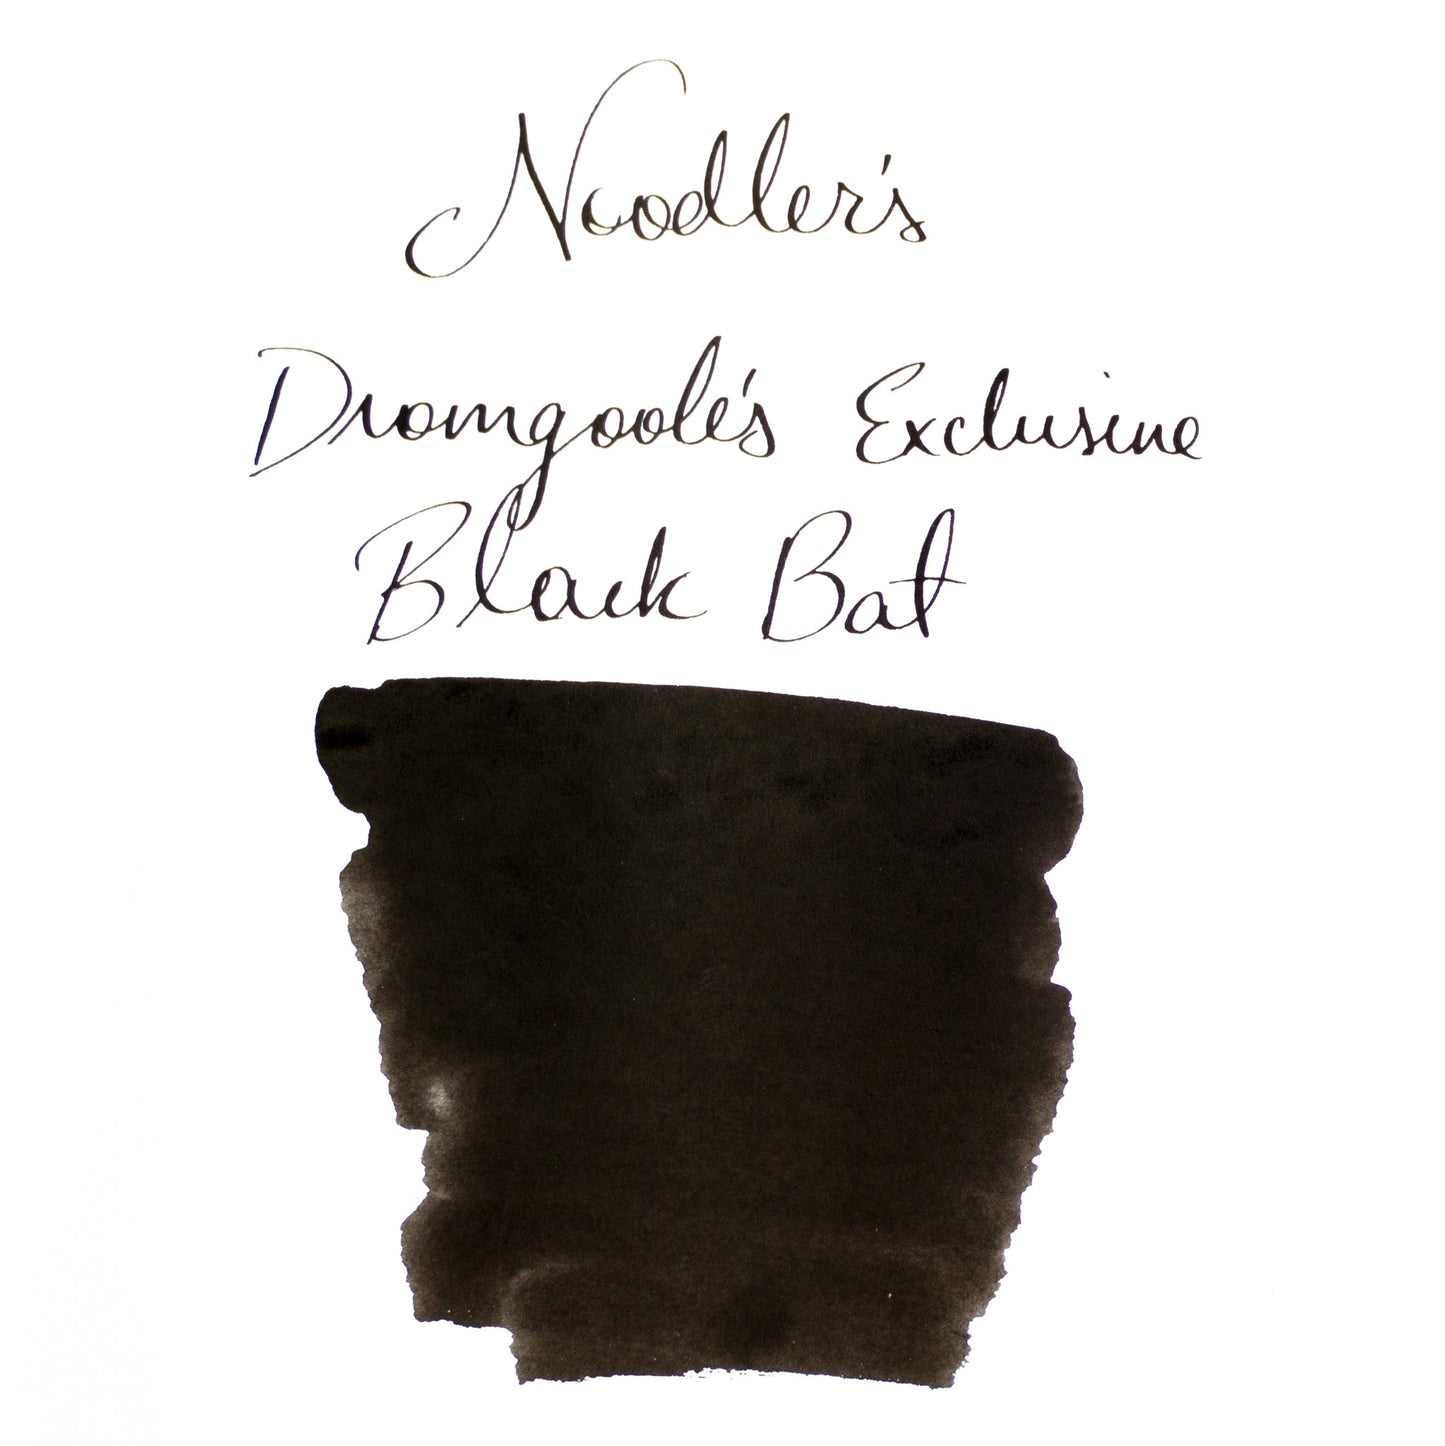 Noodler's Texas Black Bat Bottled Ink - Dromgoole's Exclusive